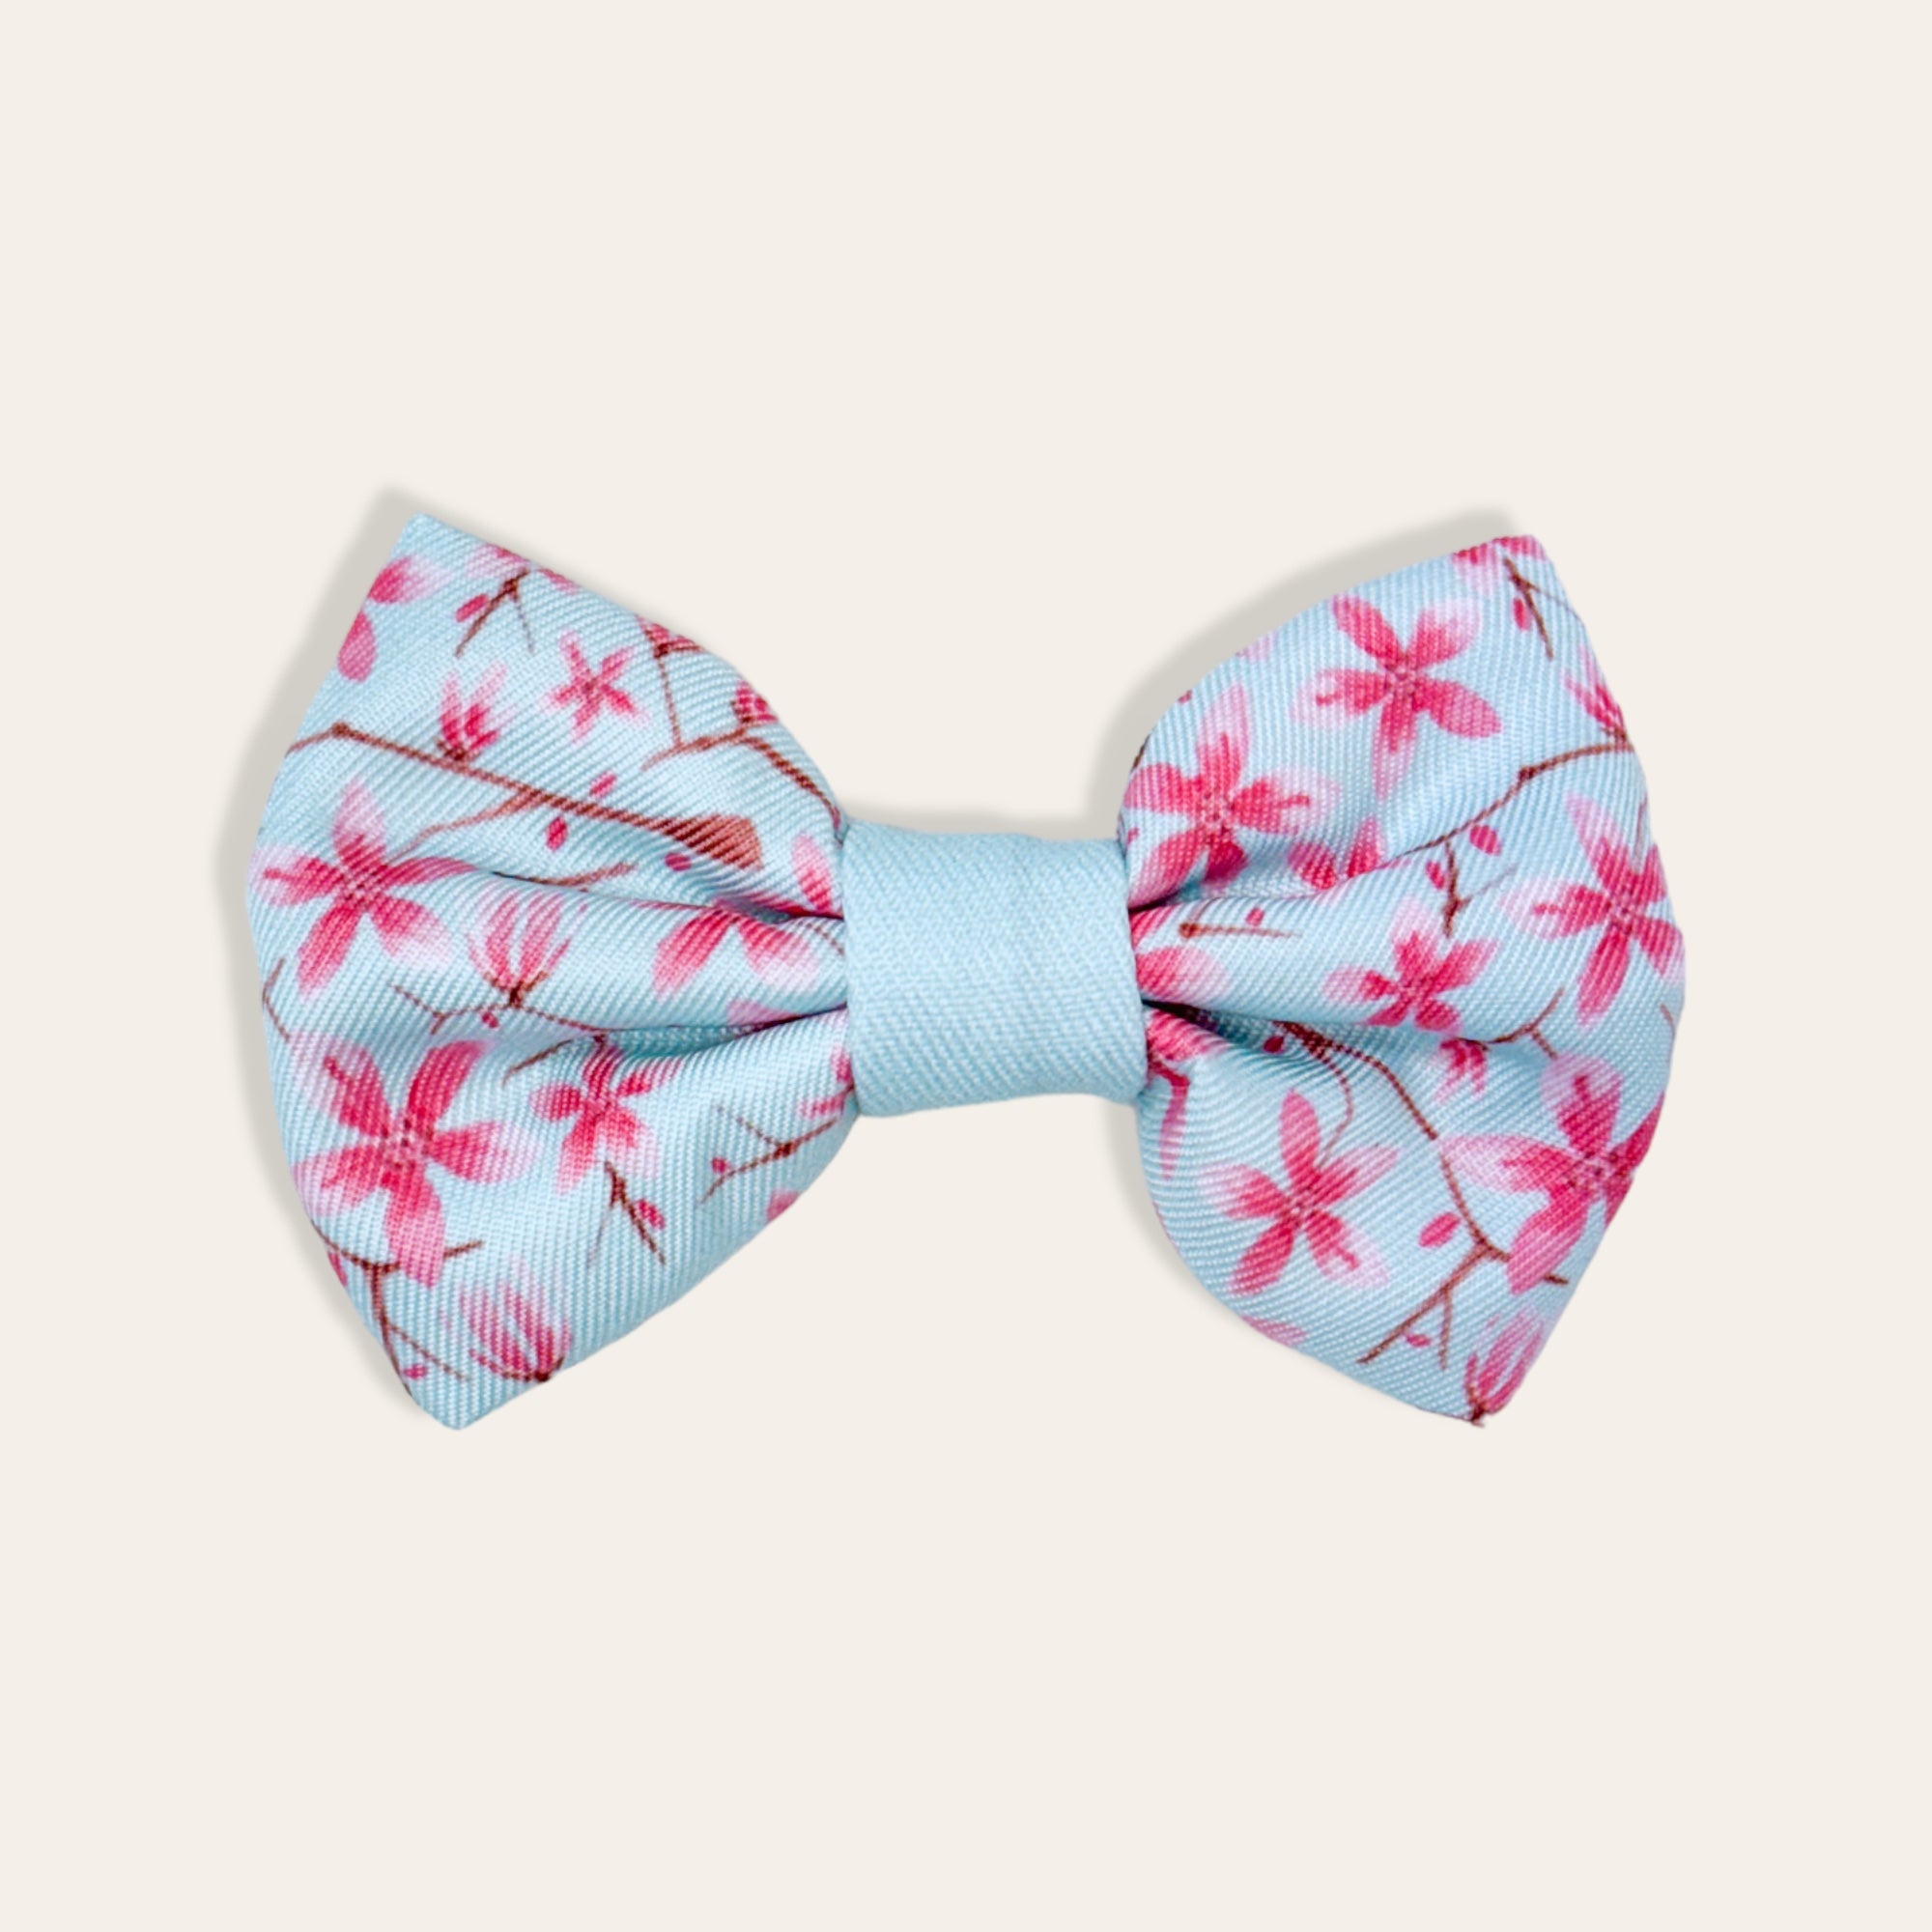 Bow Tie - Cherry Blossom